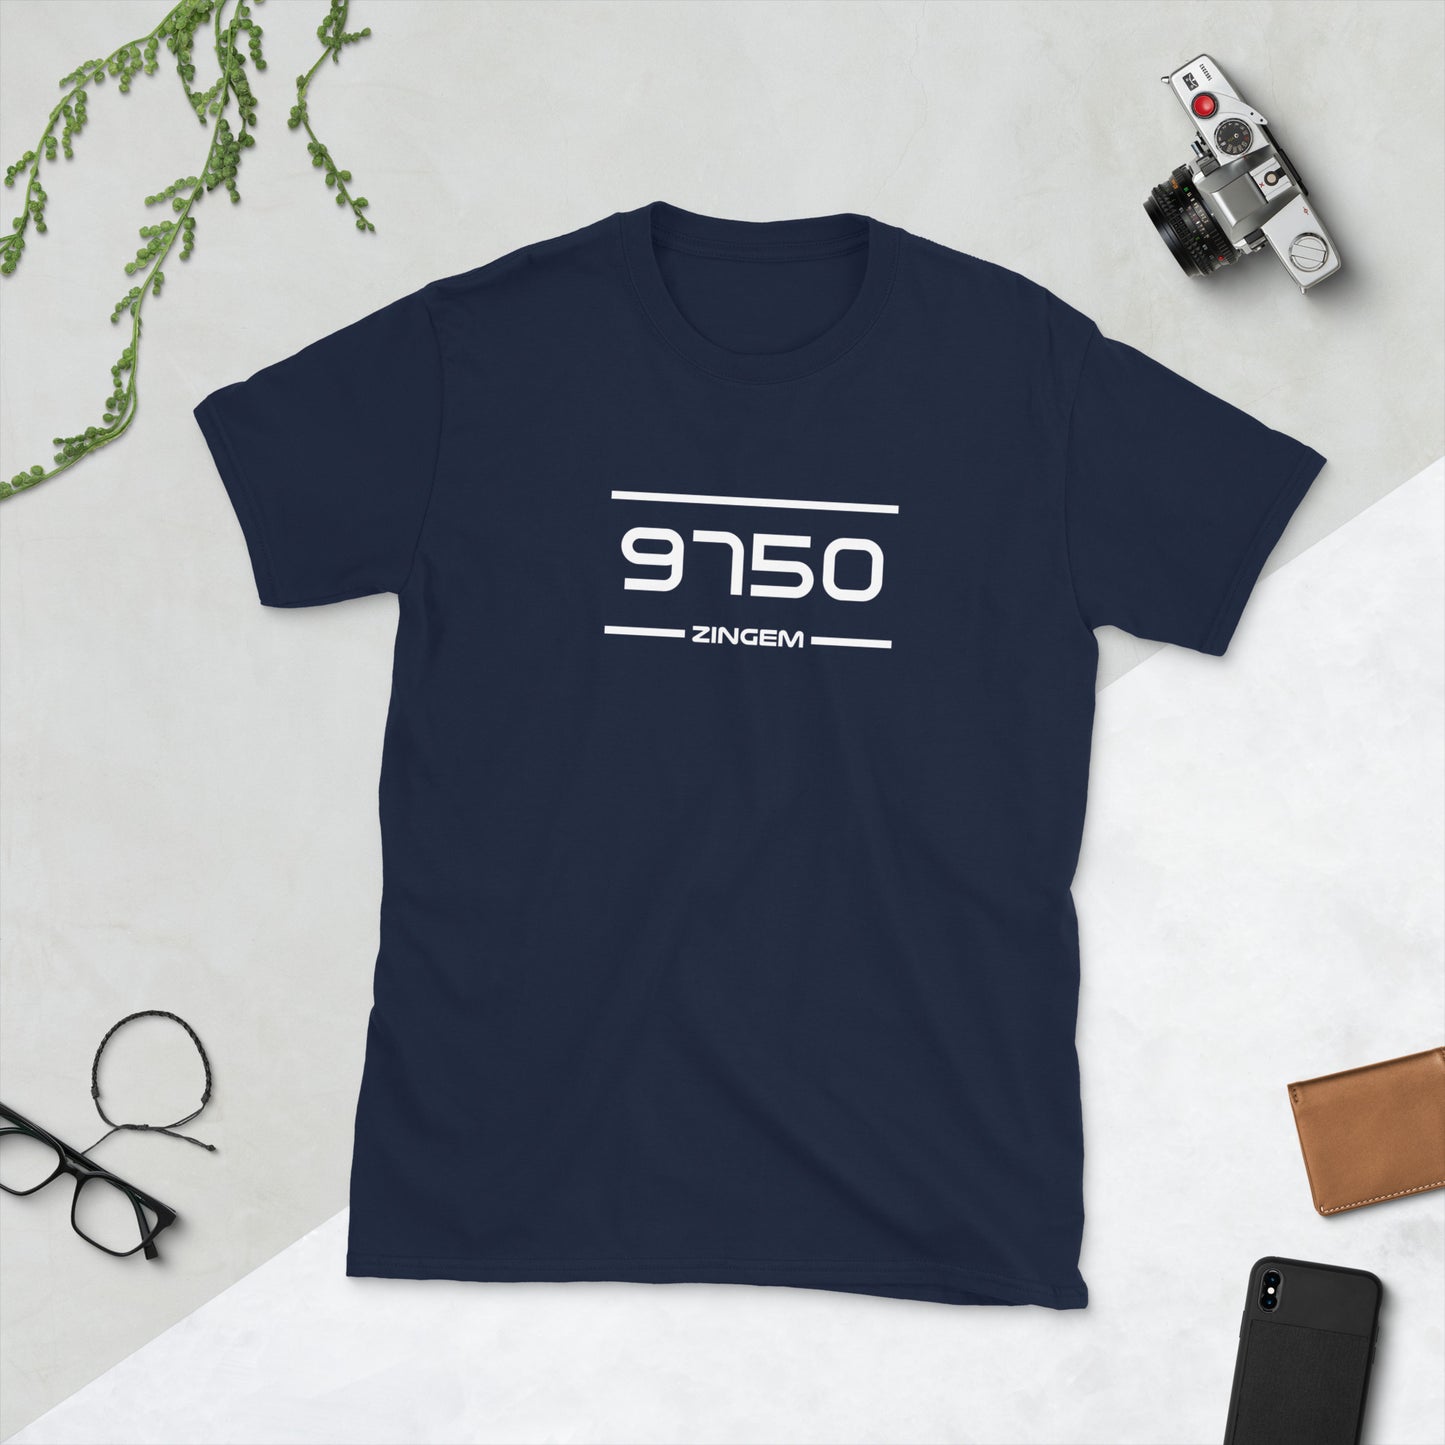 T-Shirt - 9750 - Zingem